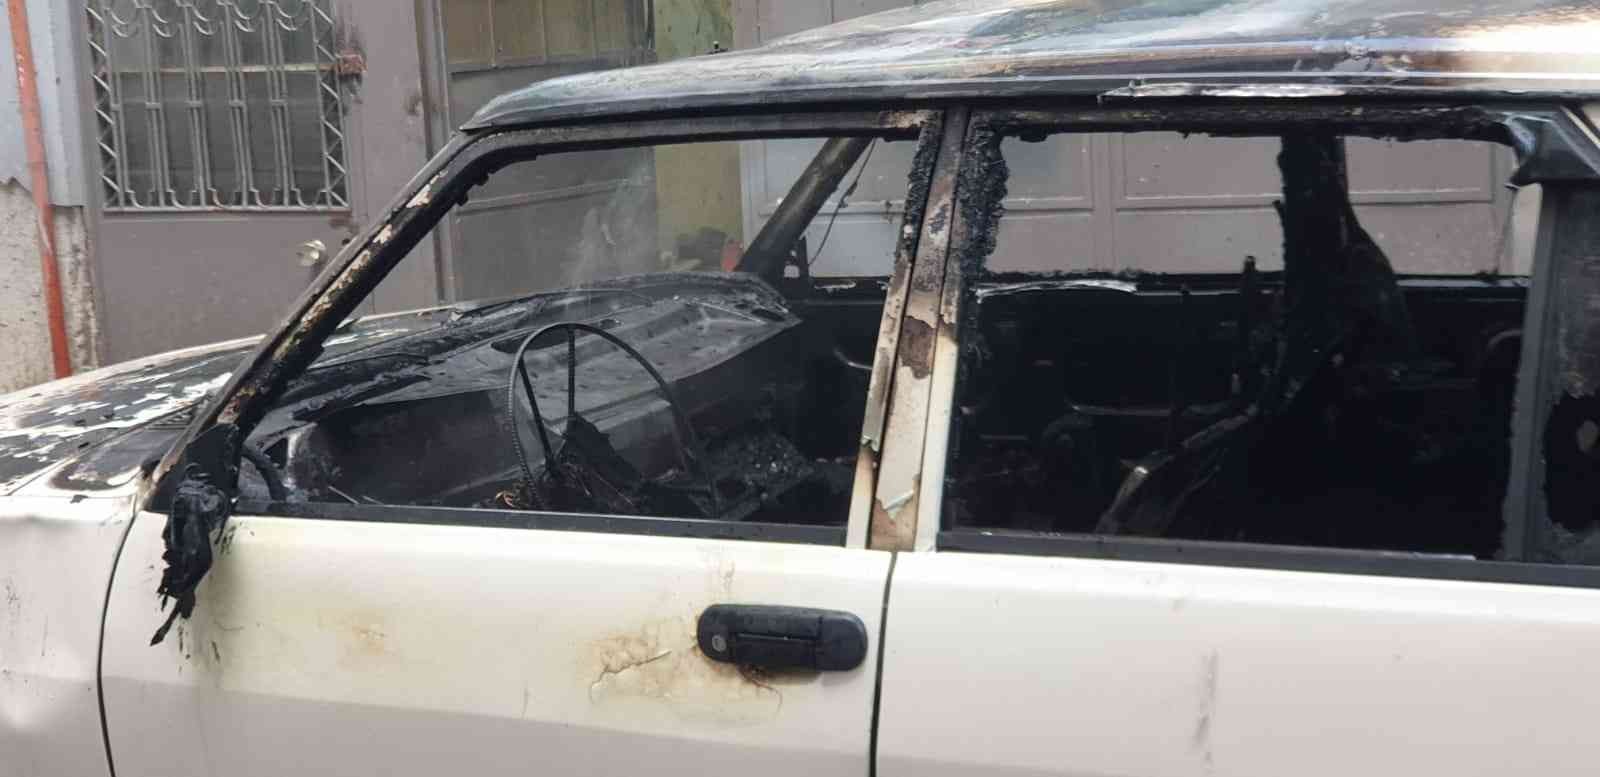 LPG’li araç alev alev yandı, vatandaşlar film izler gibi seyretti #bursa